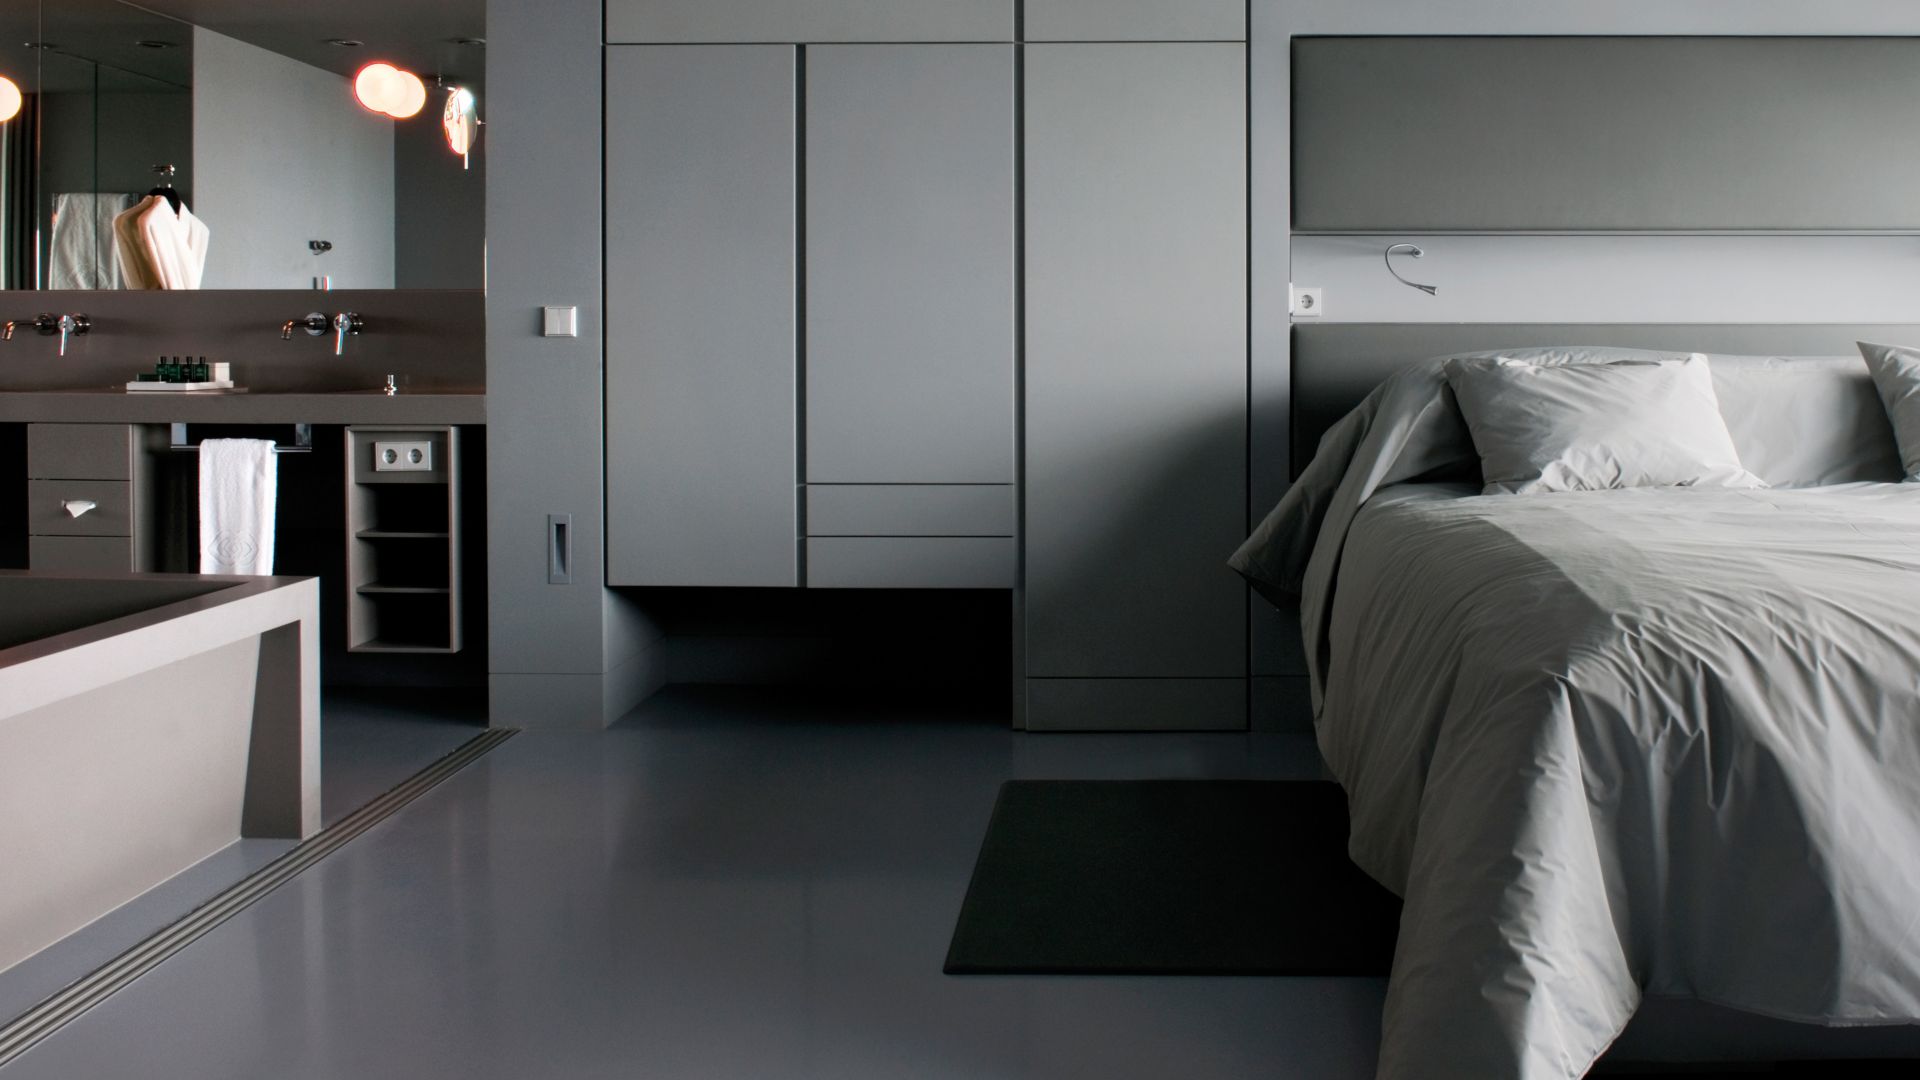 Sika ComfortFloor® grey floor in modern hotel room with bed and bathroom